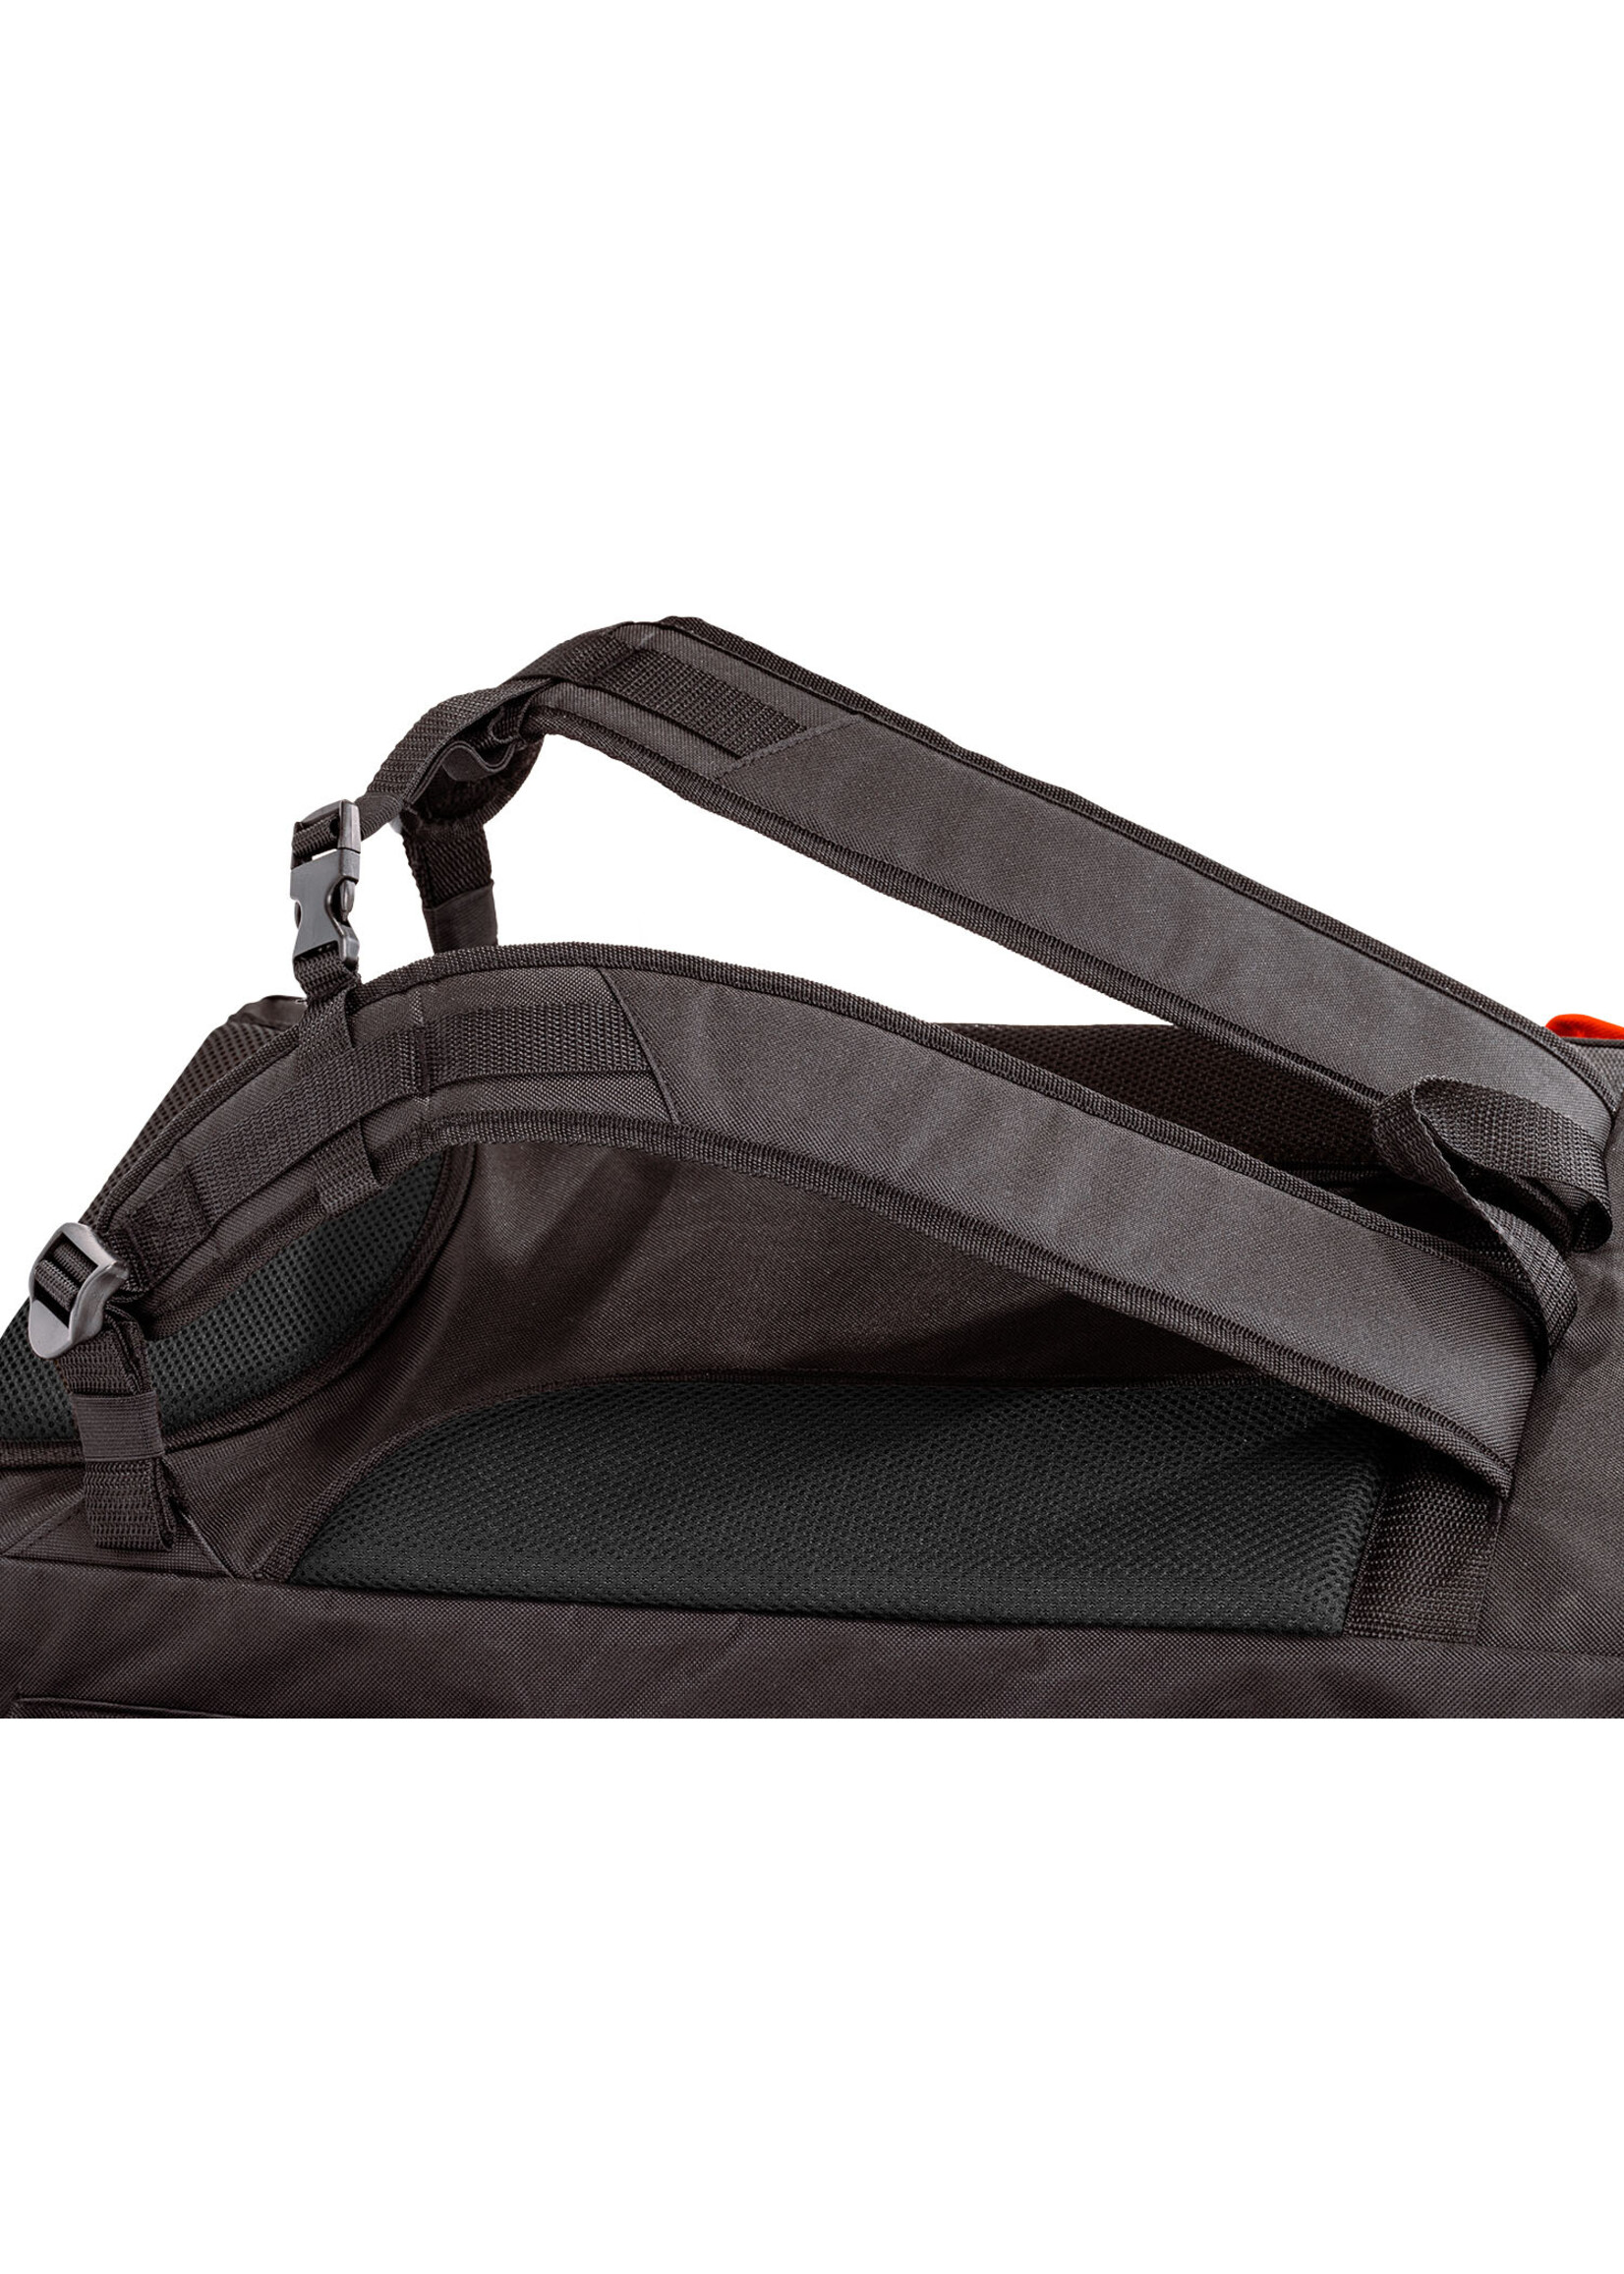 Traxxas 9916 - RC Car Backpack